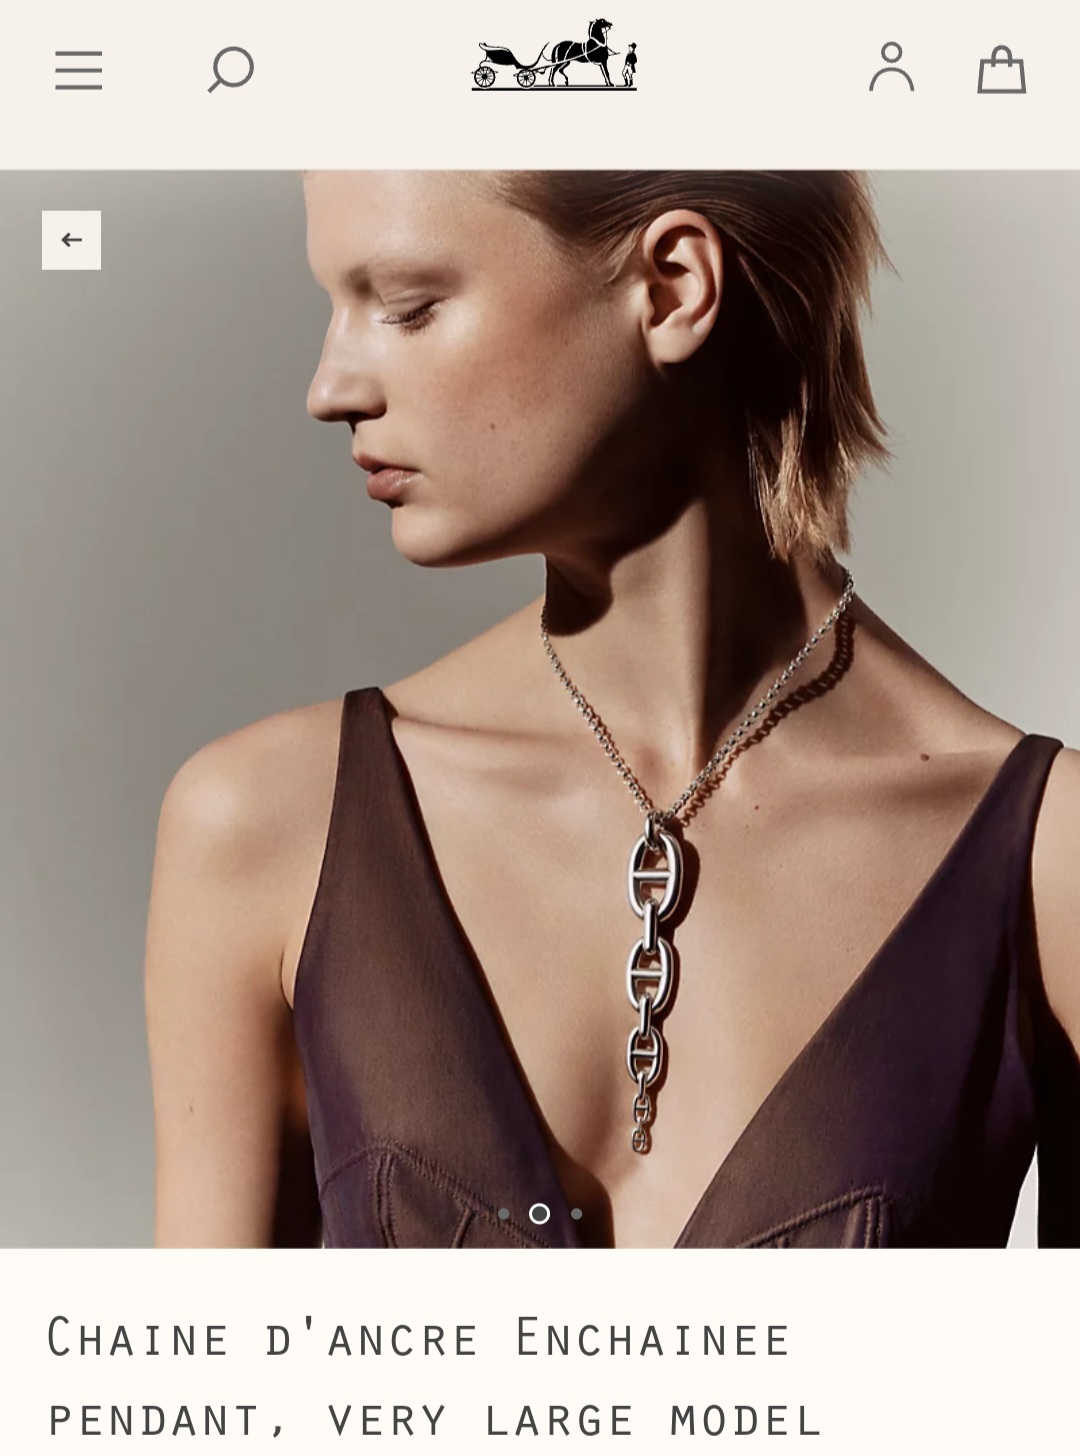 Hermes Chaine d’ancre Enchainee pendant necklace